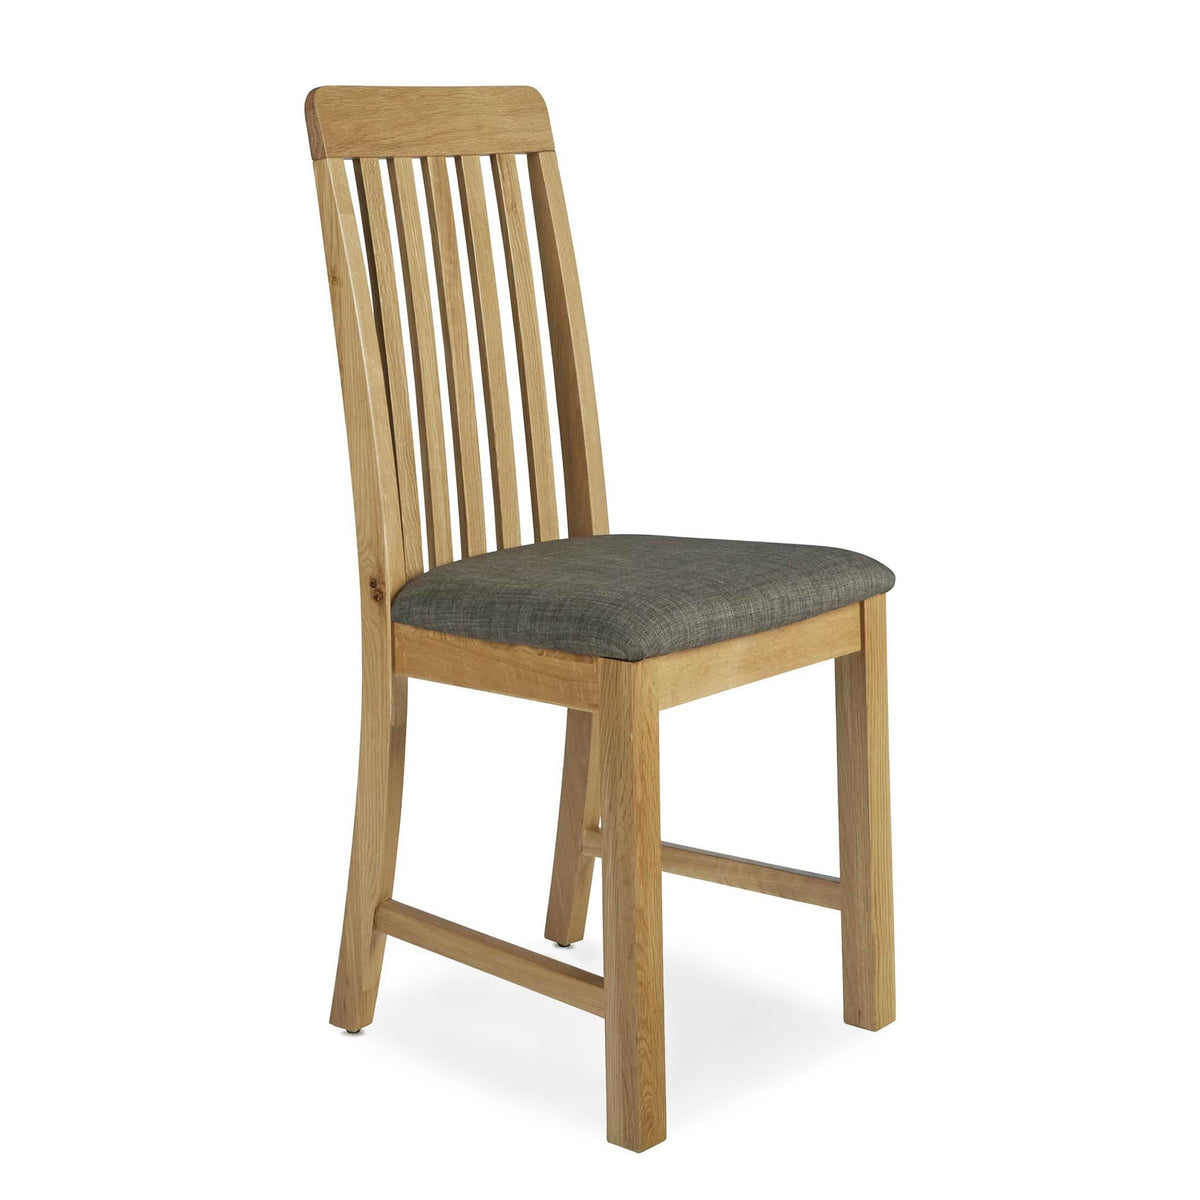 Alba Oak Slatted Dining Chair by Roseland Furniture